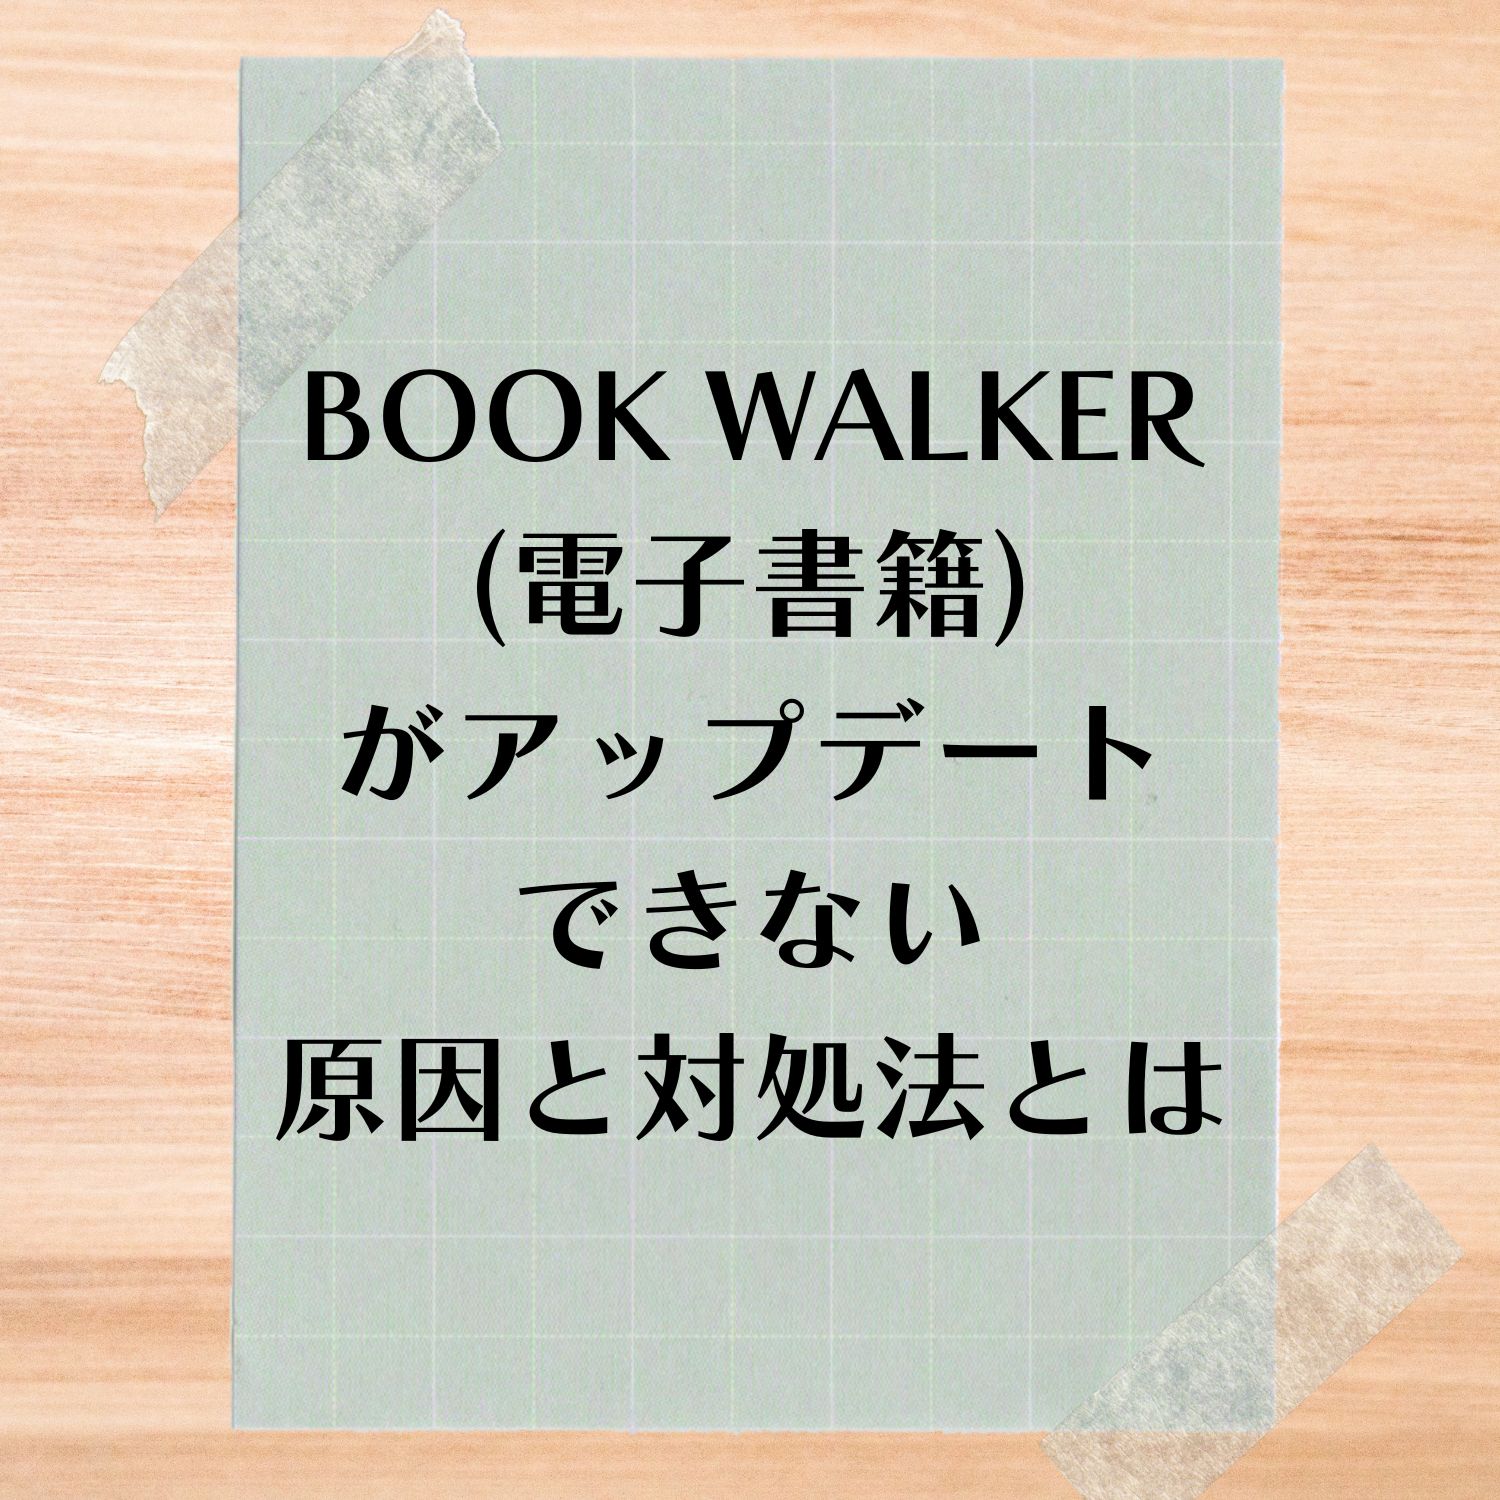 BOOK WALKER (電子書籍）がアップデートできない原因と対処法とは